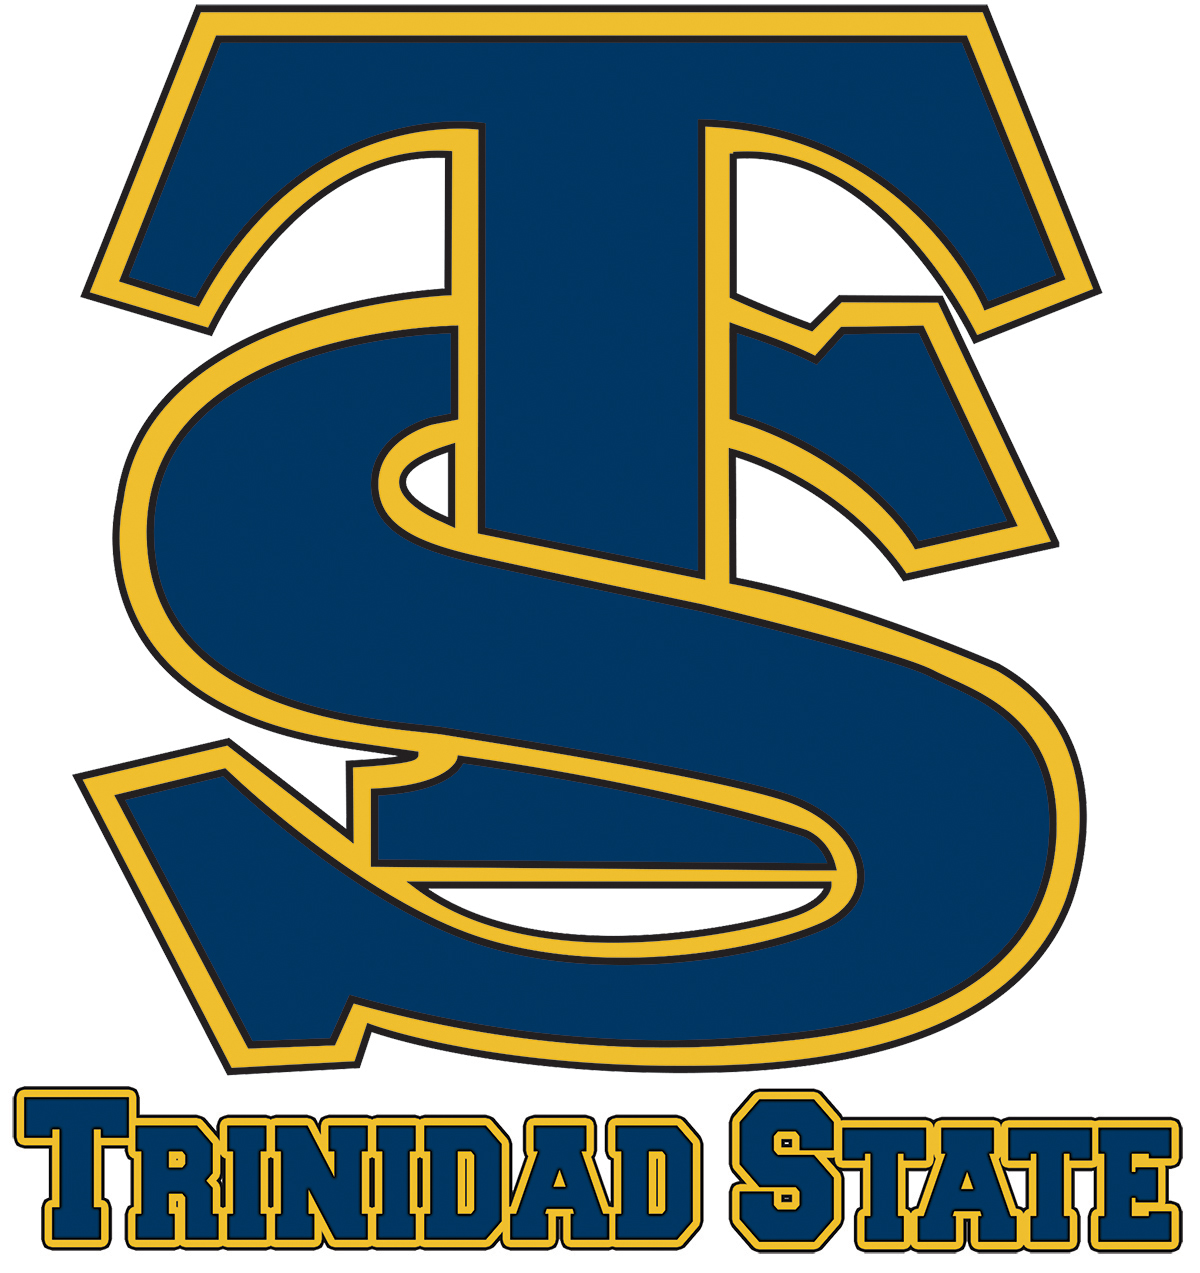 Trinidad State square logo image